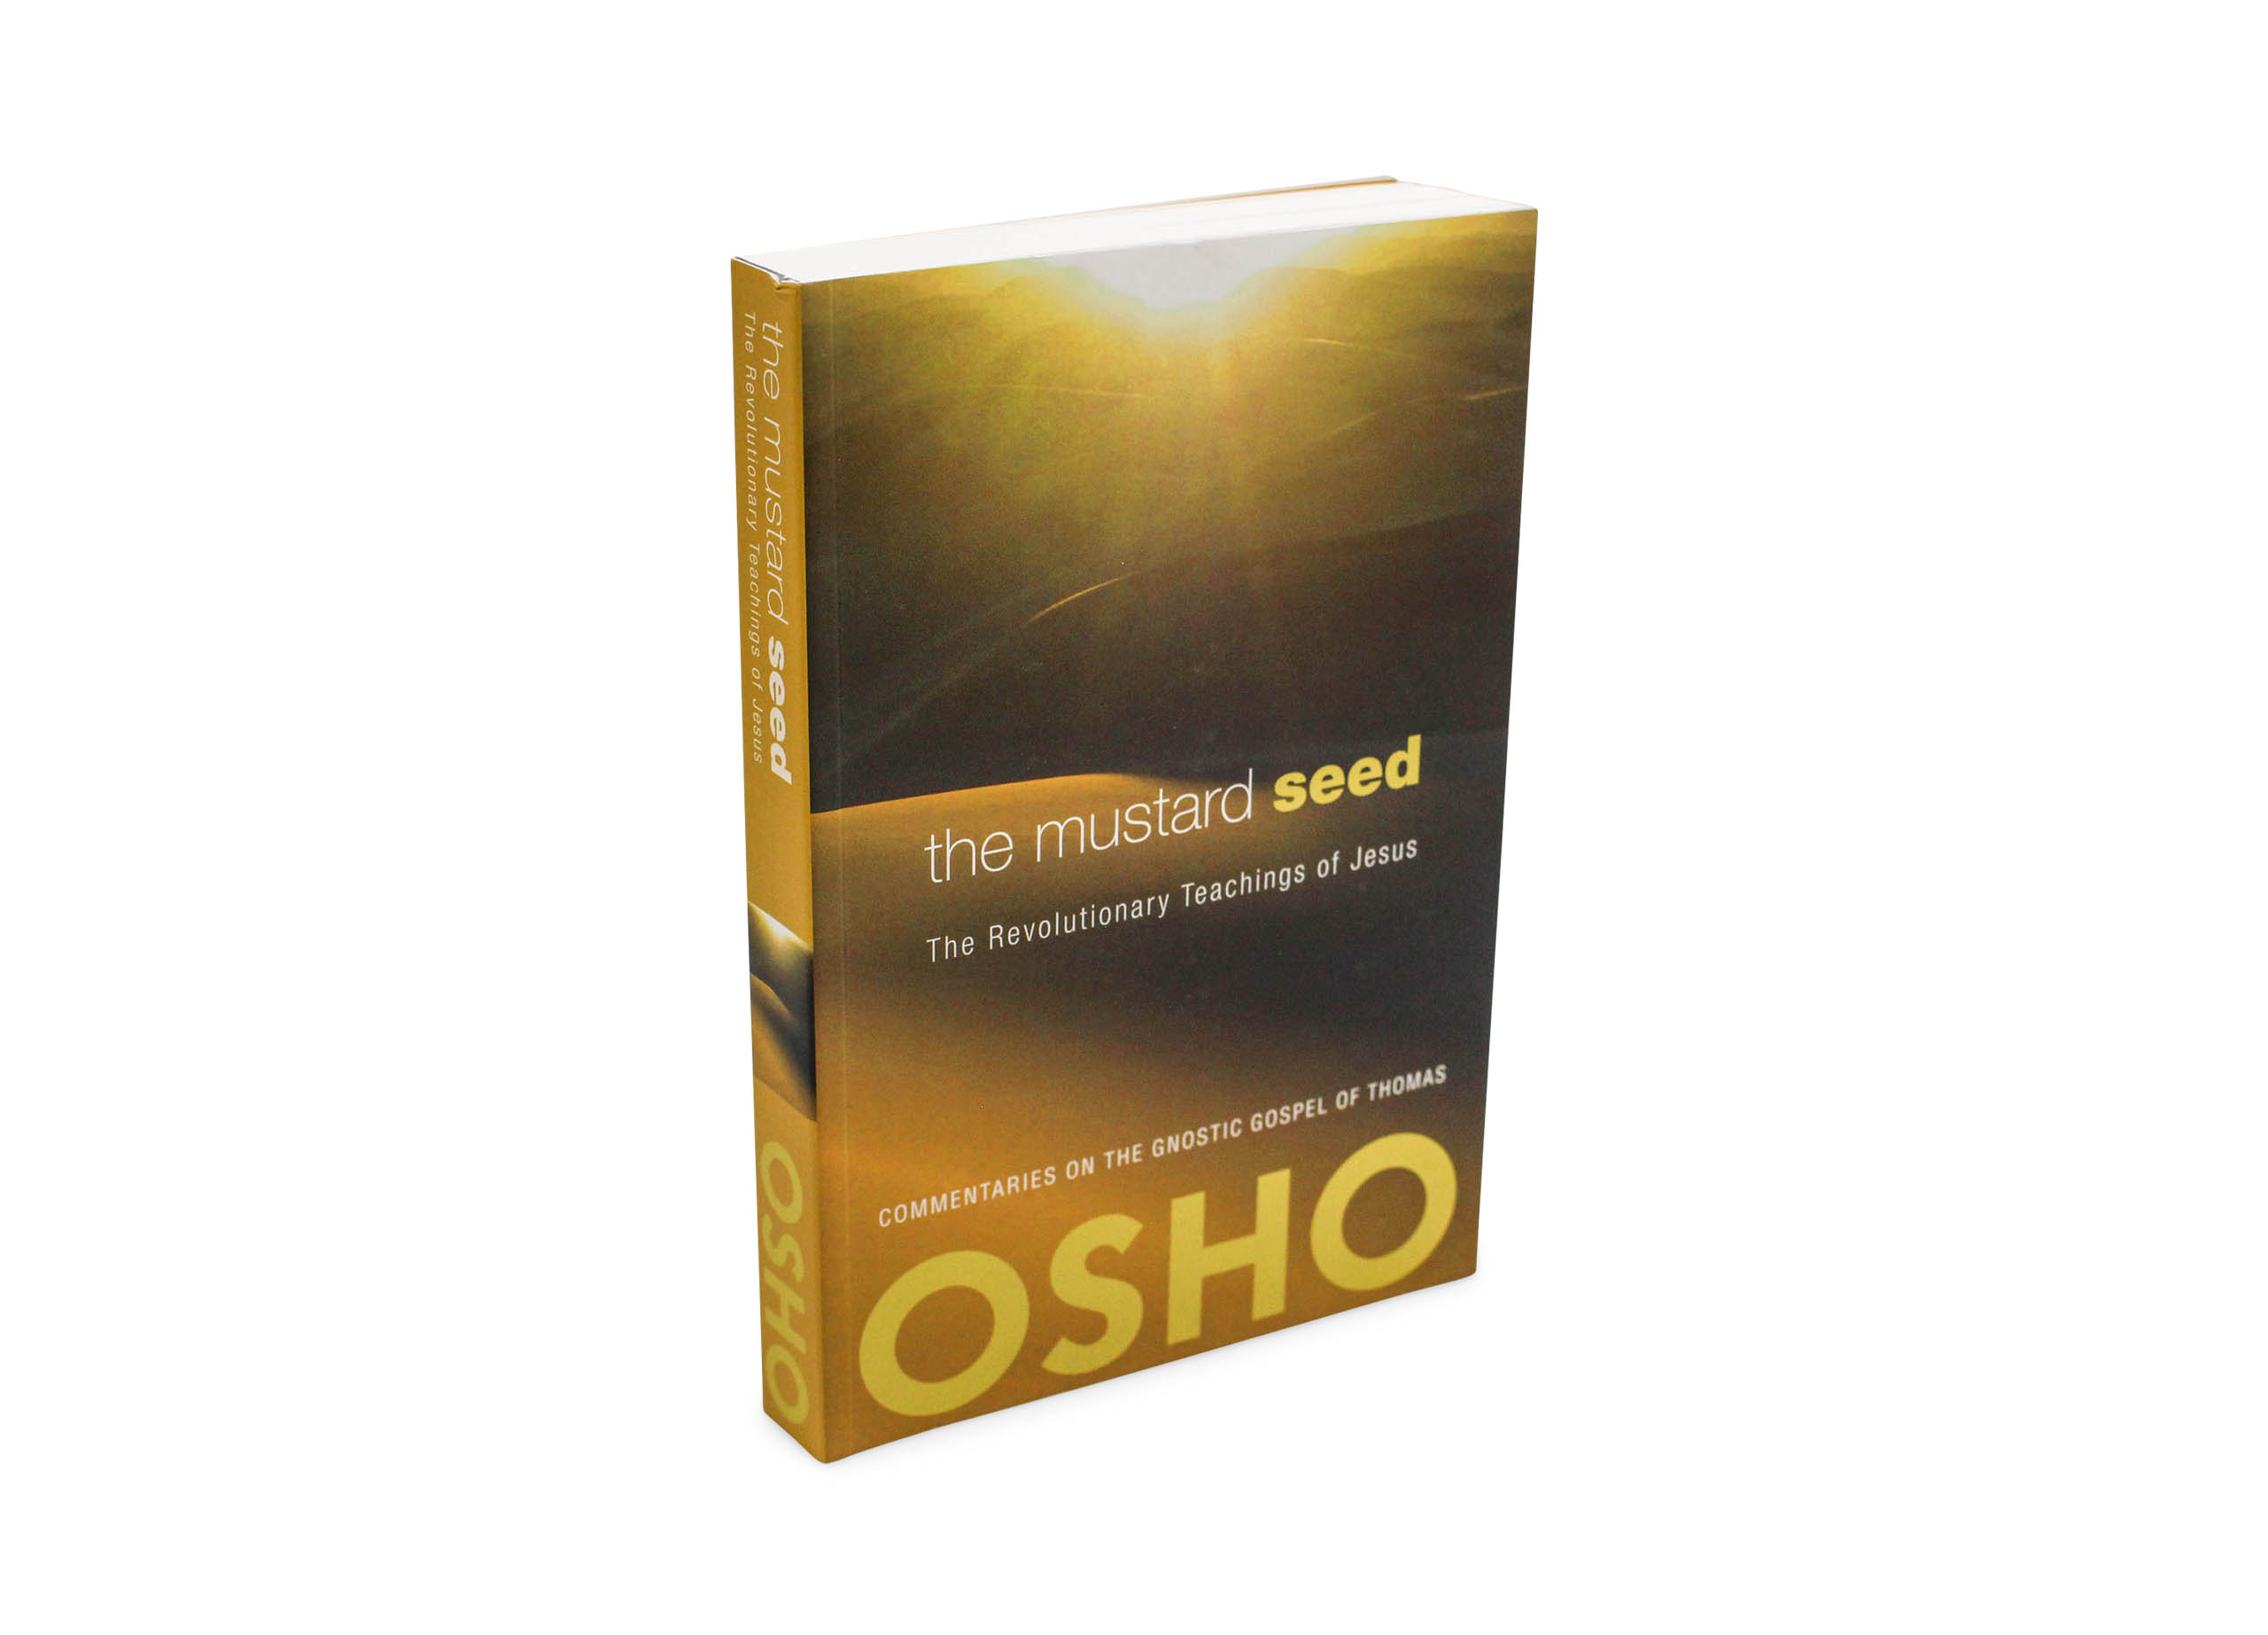 The Mustard Seed Book - Crystal Dreams